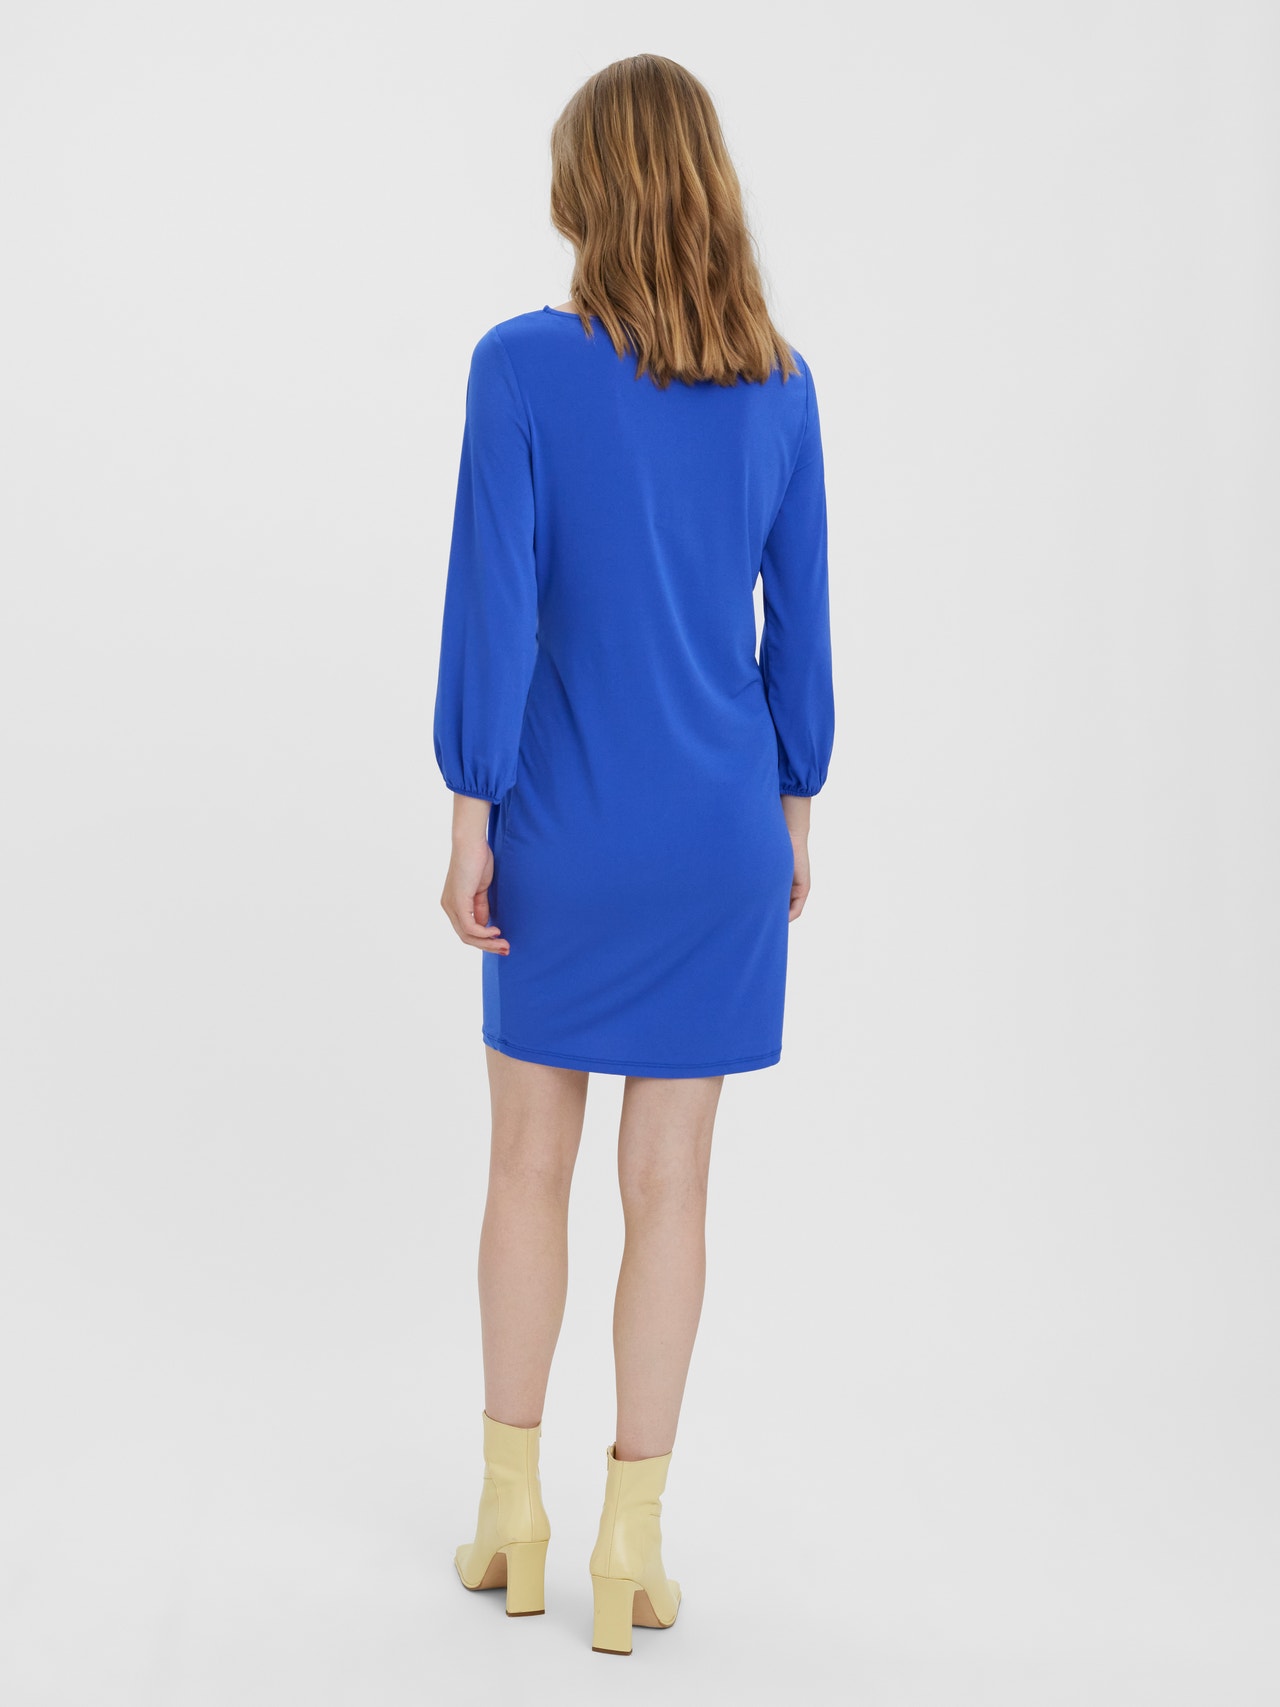 Vero Moda VMTWISTED Short dress -Dazzling Blue - 10266618